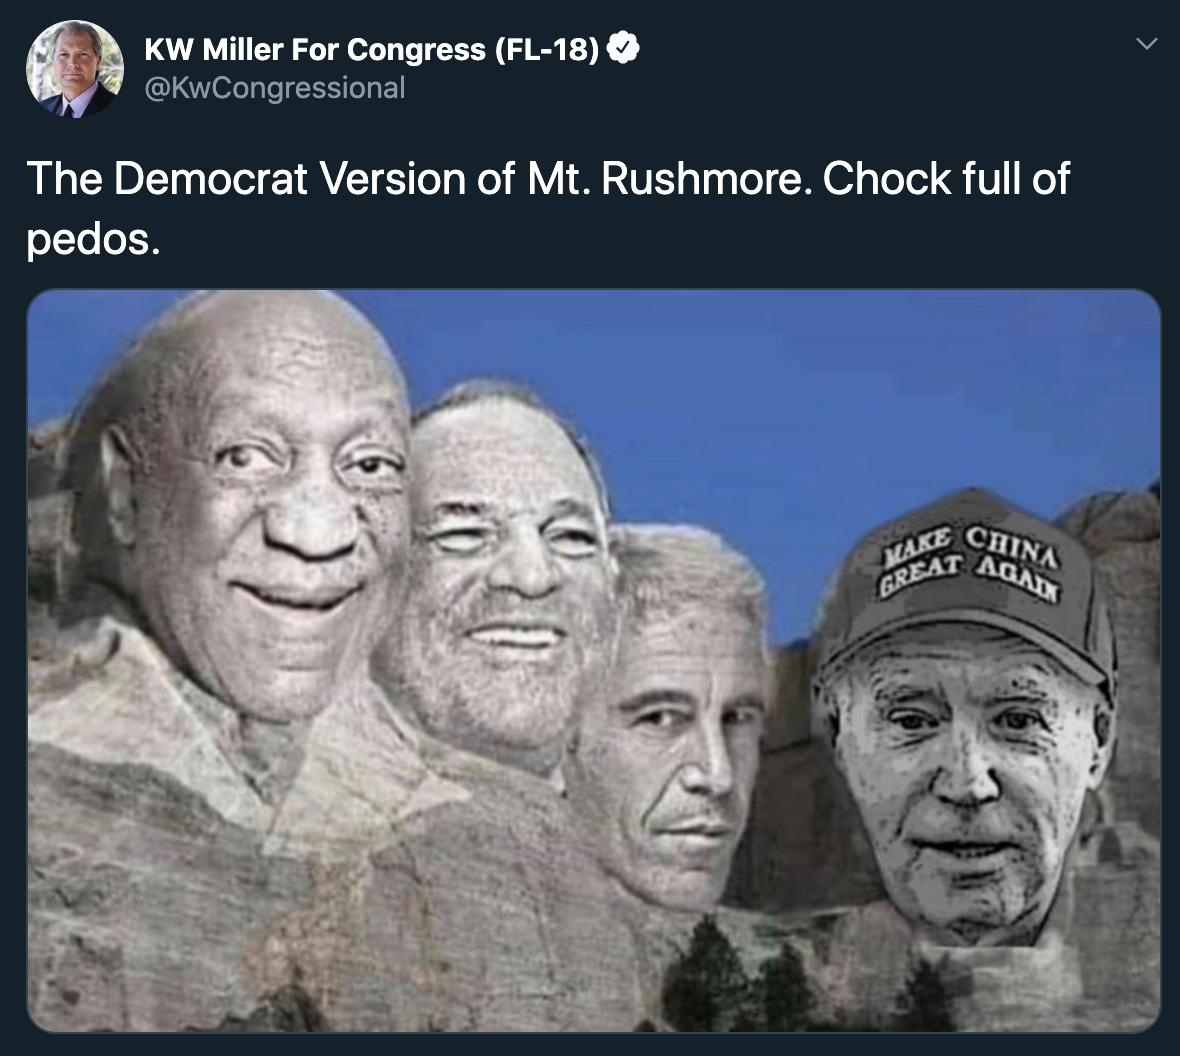 mount rushmore - Kw Miller For Congress Fl18 The Democrat Version of Mt. Rushmore. Chock full of pedos. China Make Great Again